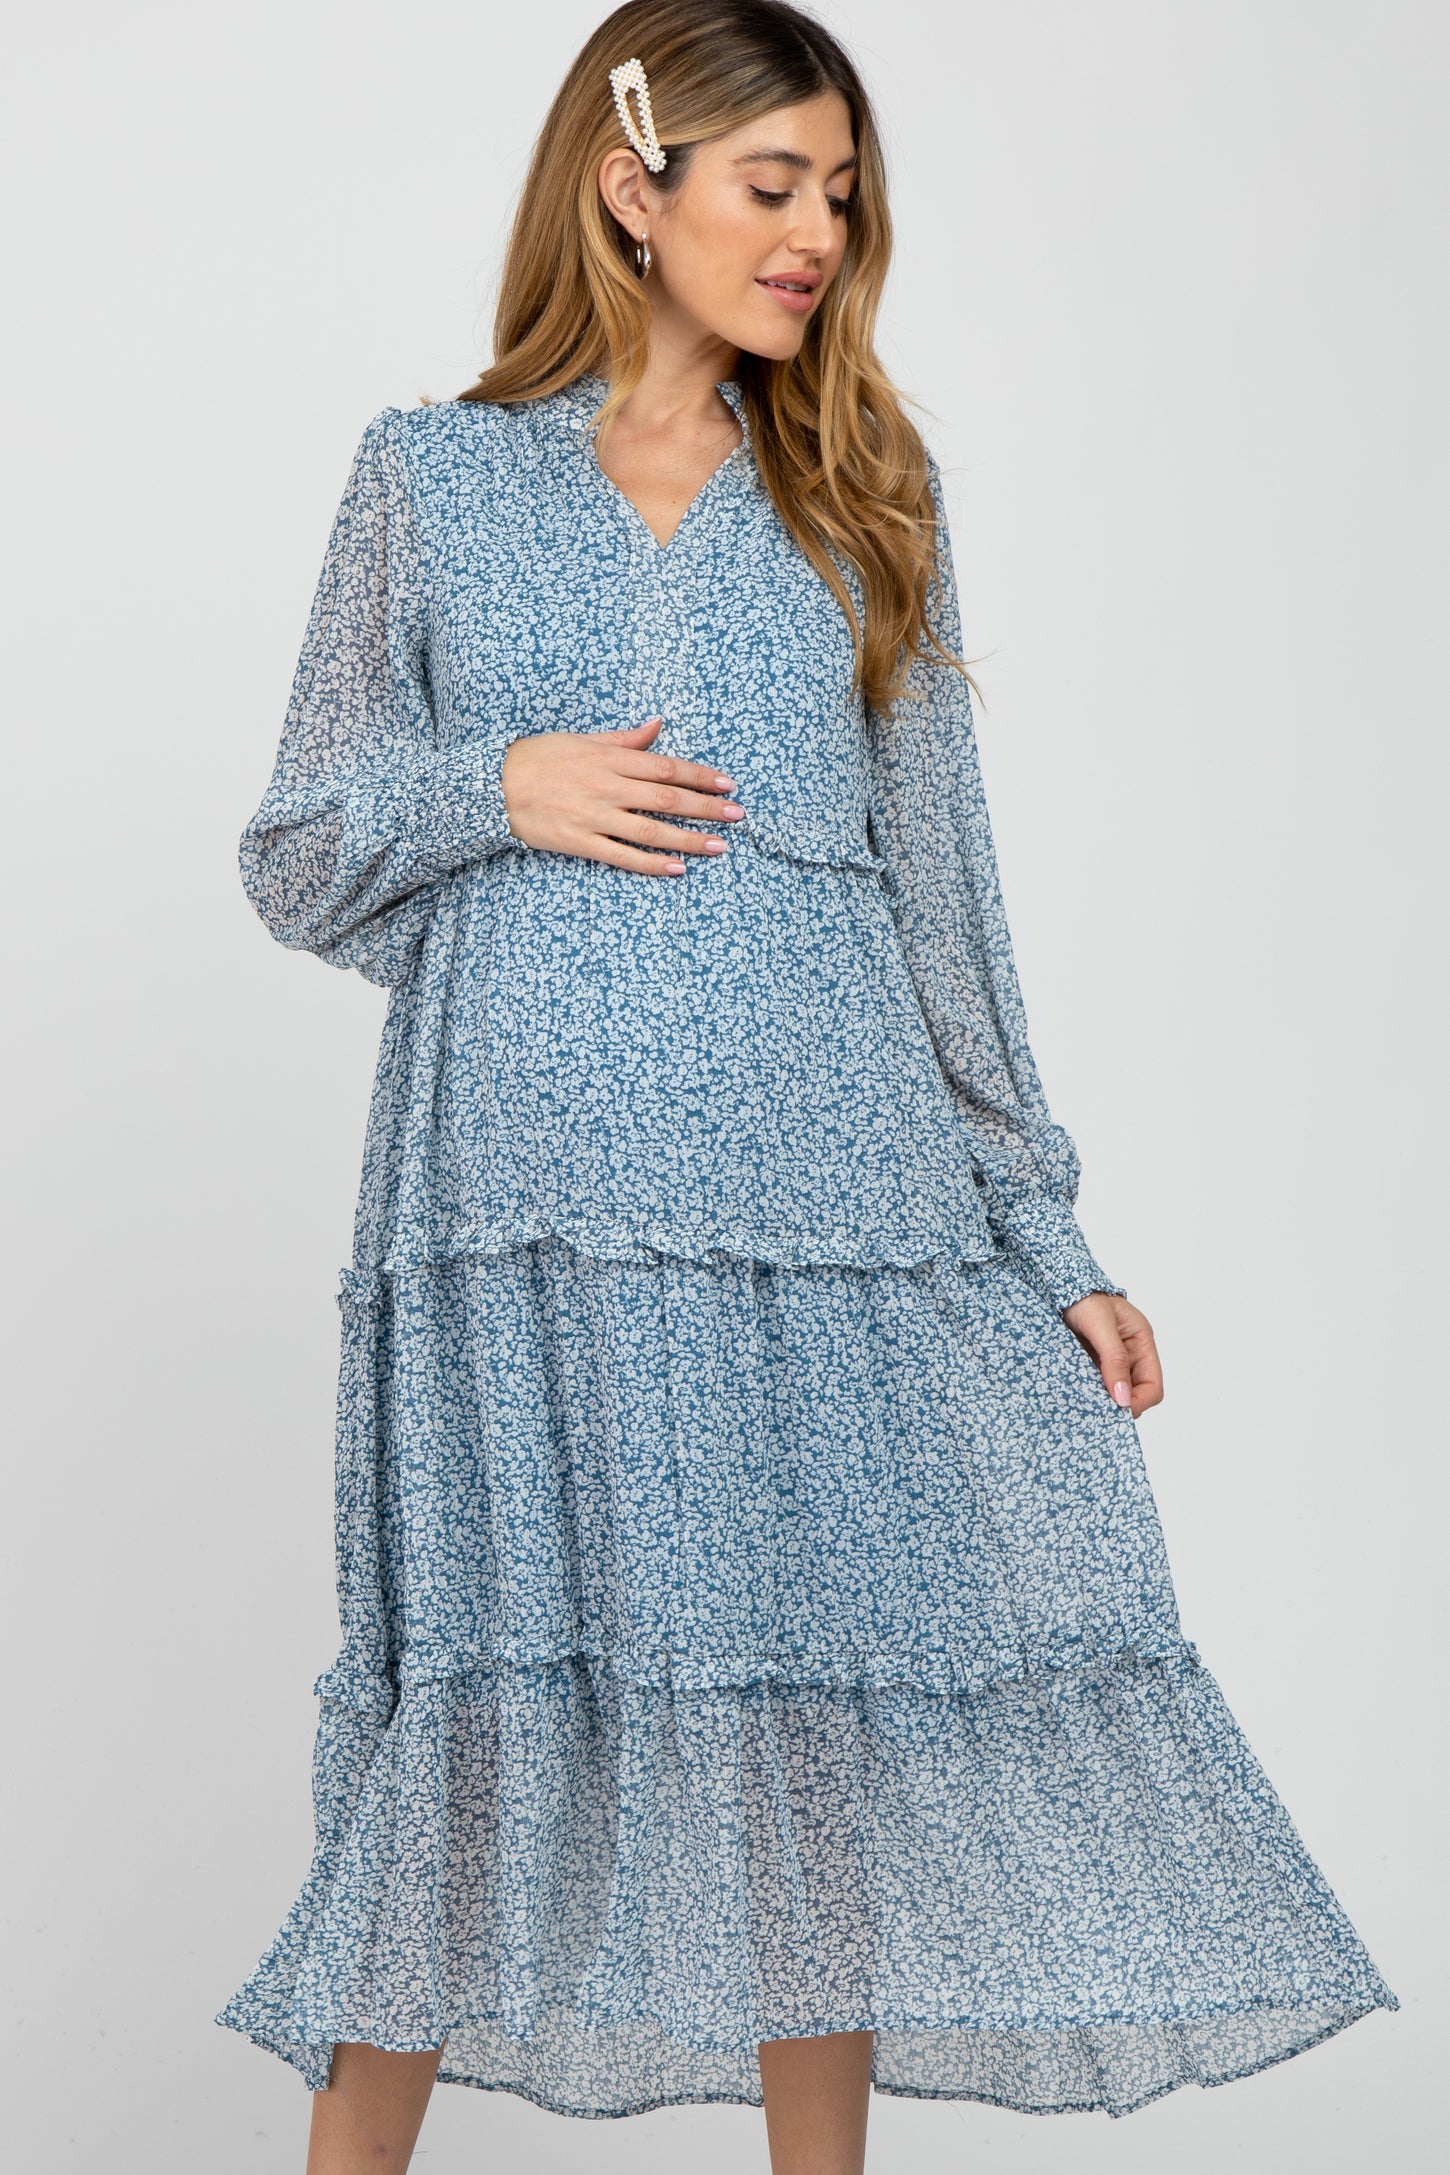 Light Blue Floral Print Ruffle Tiered Maternity Dress